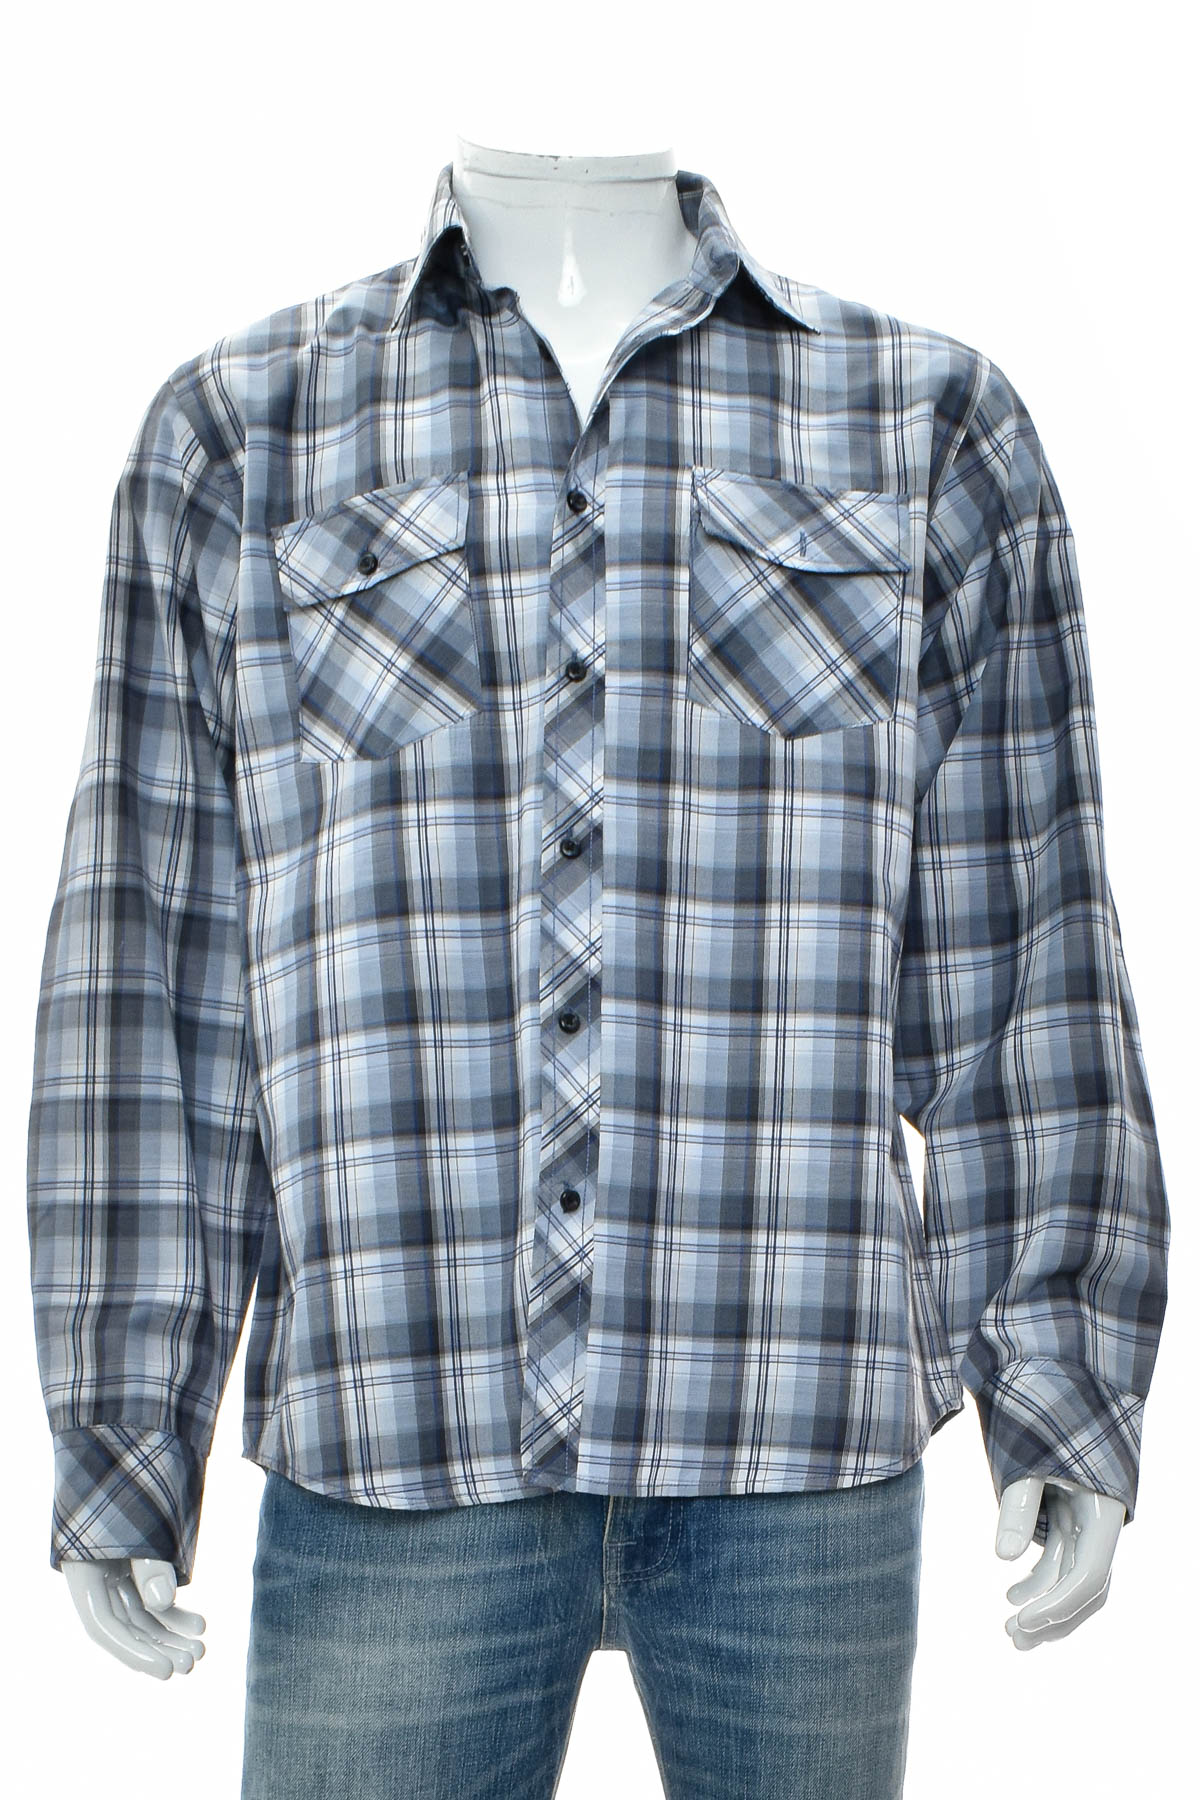 Men's shirt - LEVEL T.E.N - 0